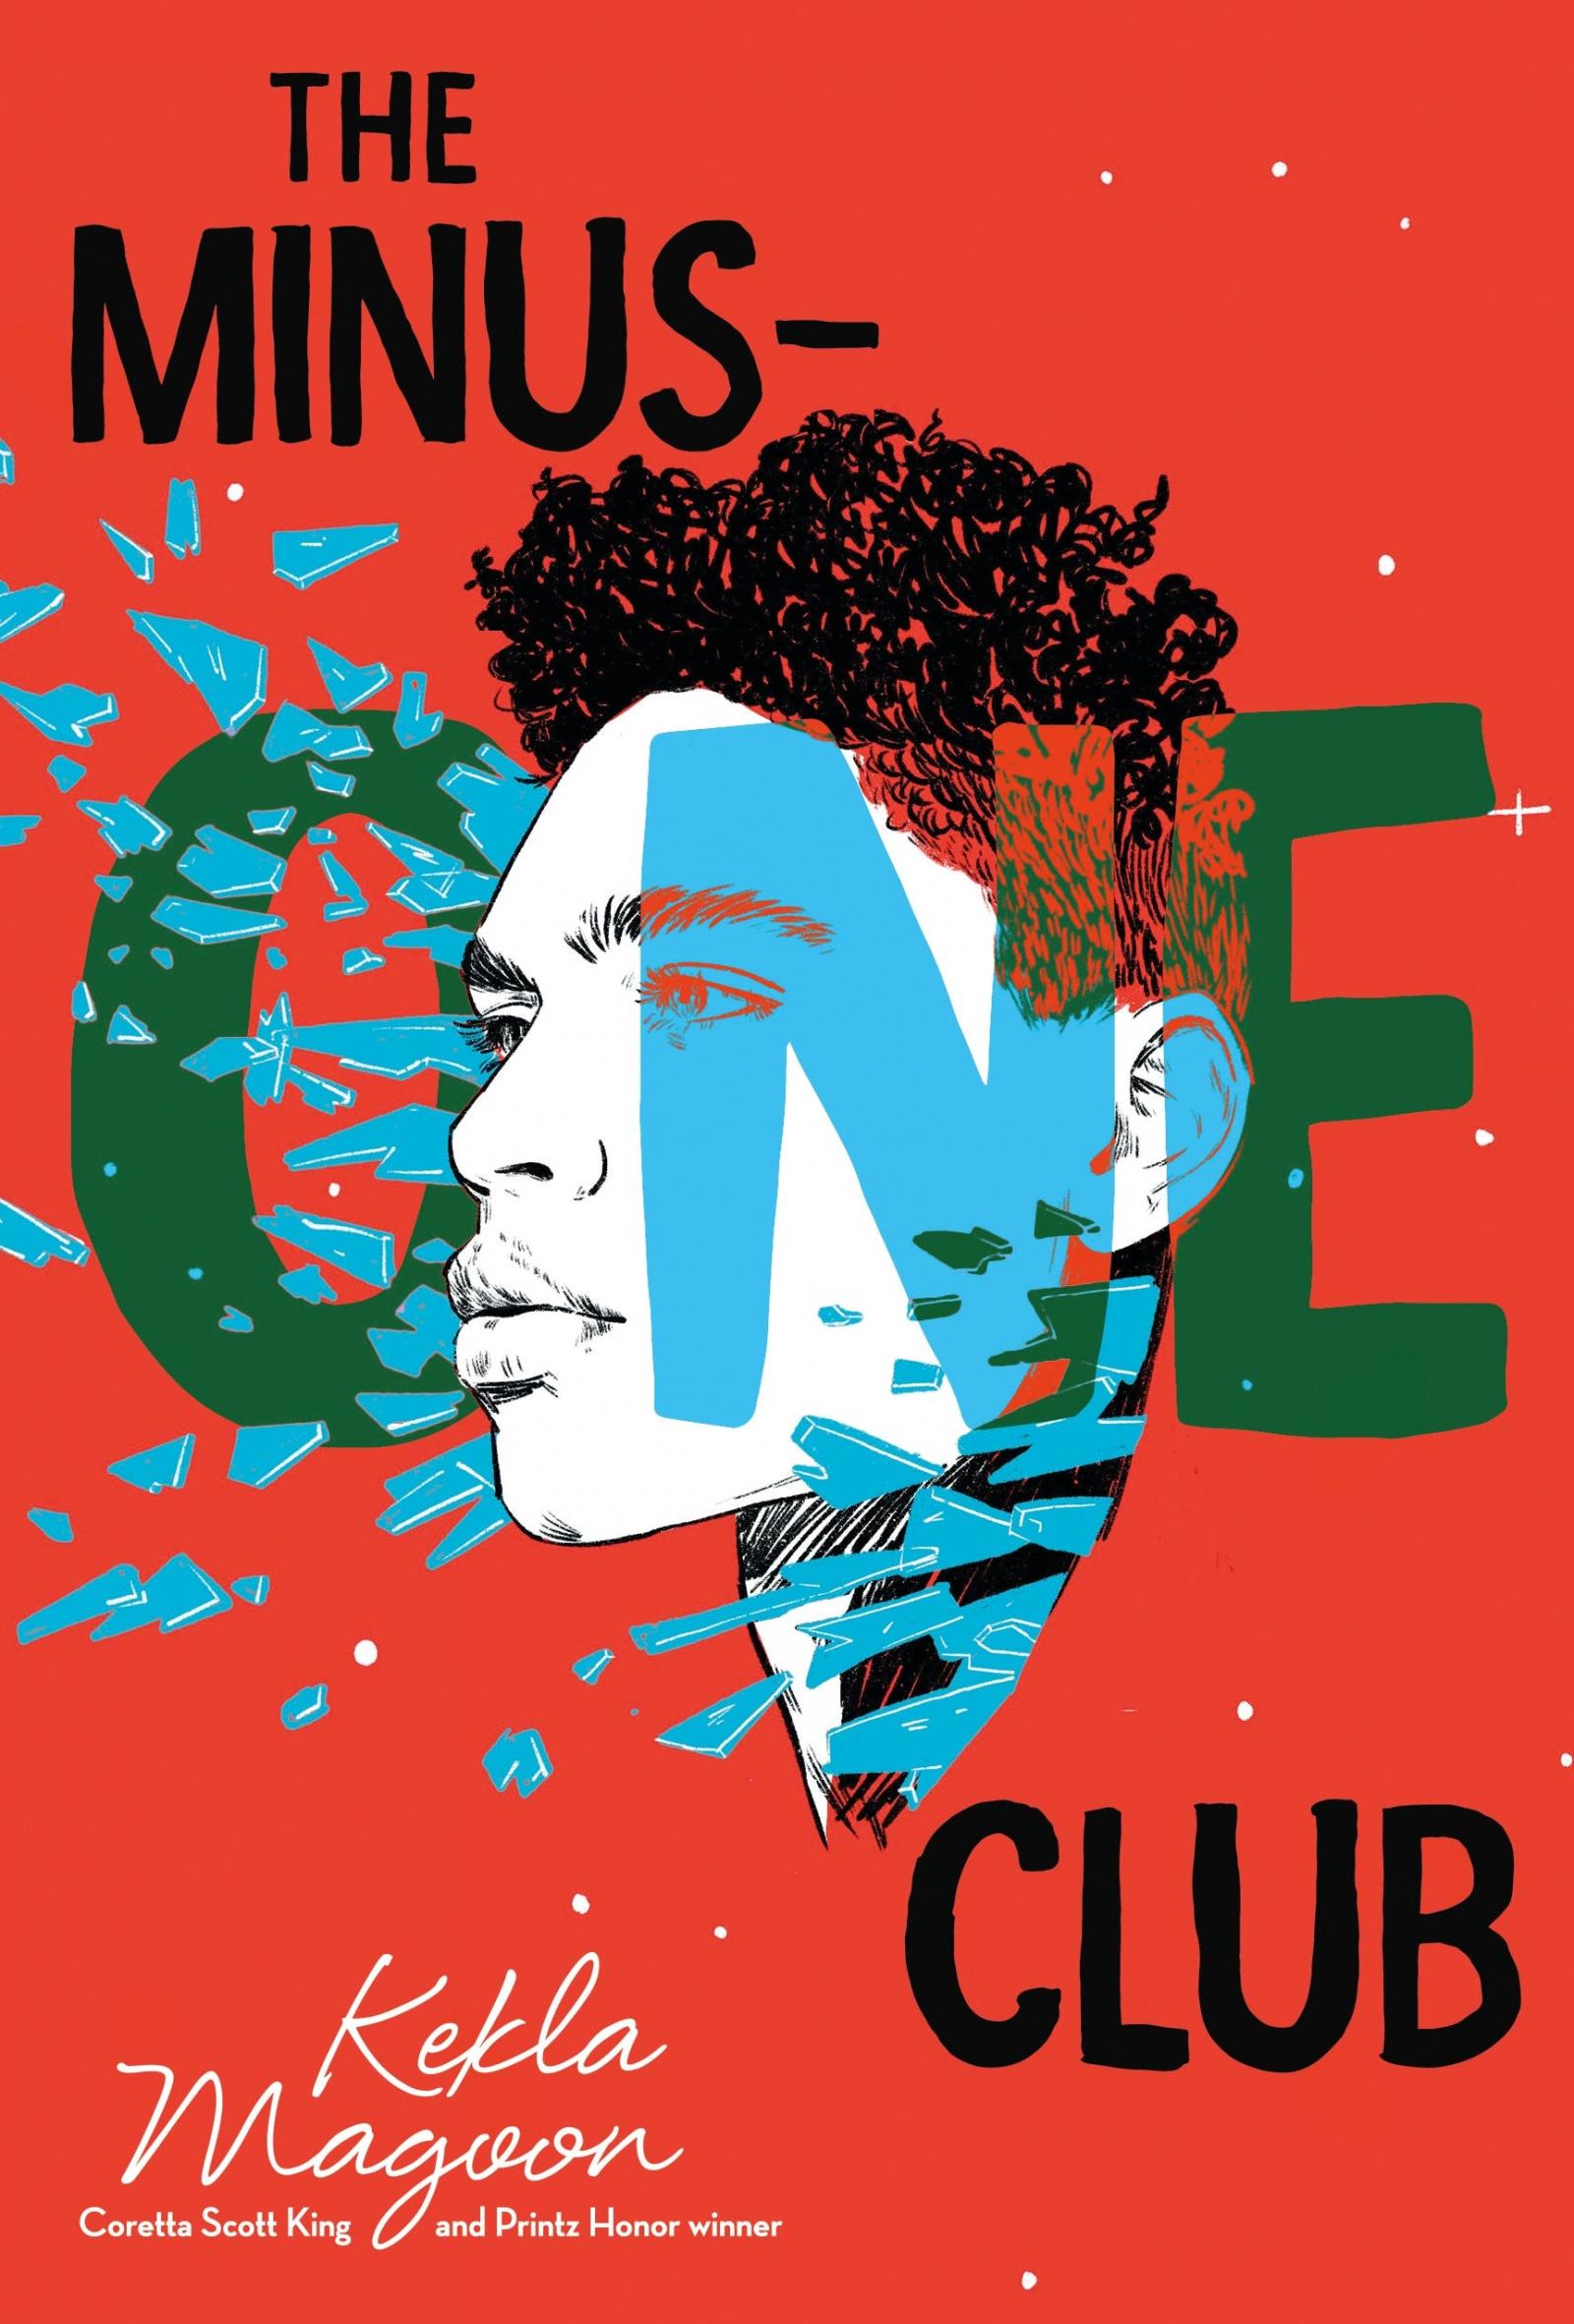 The Minus-One Club by Kekla Magoon